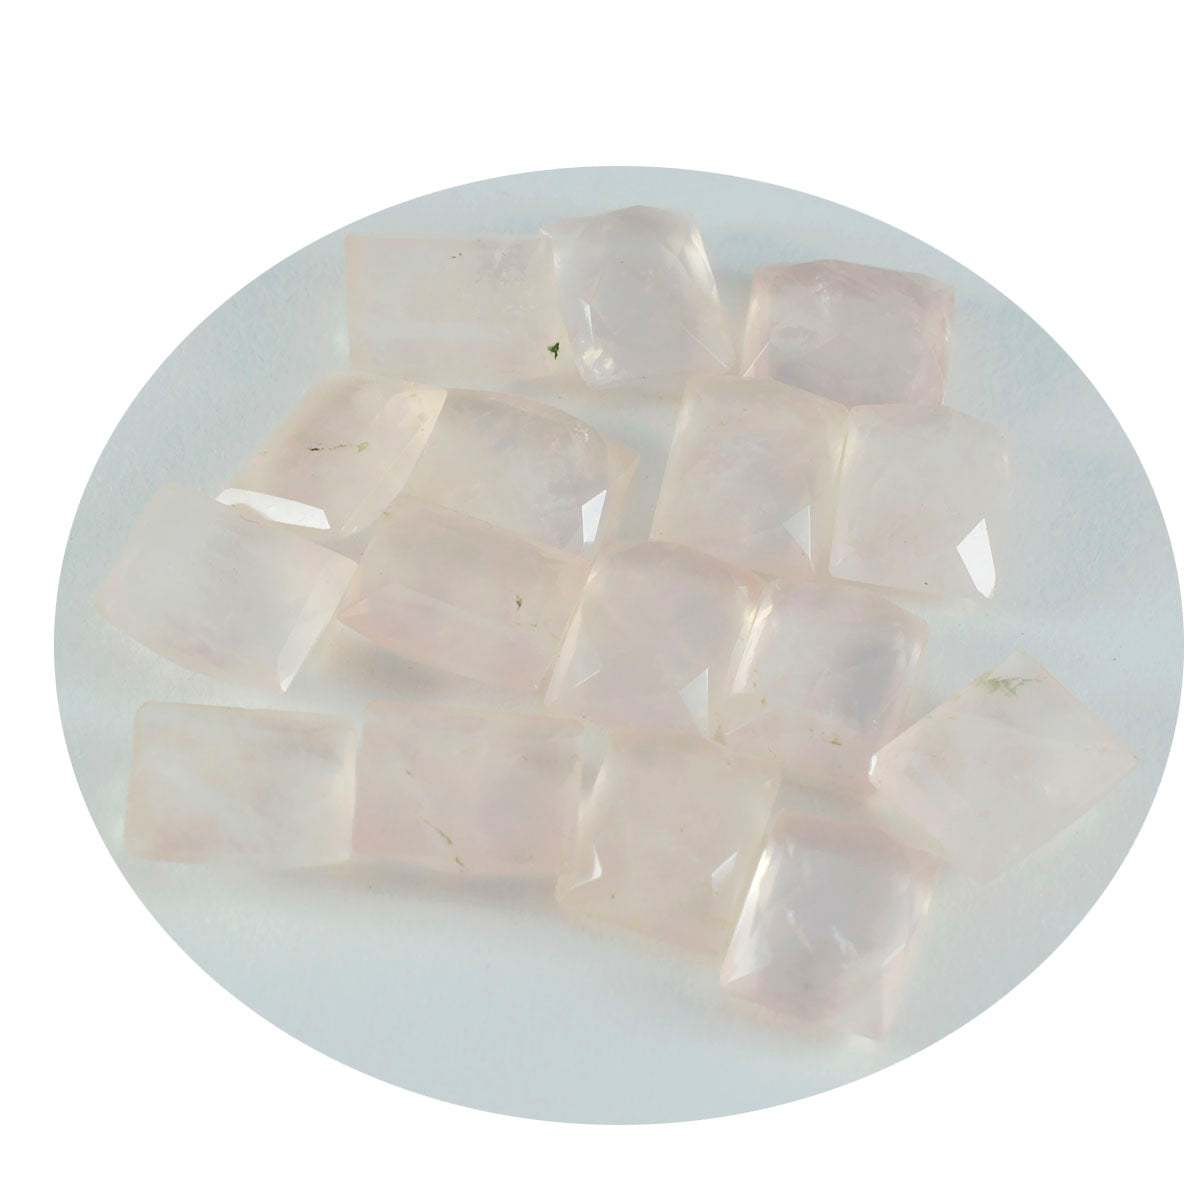 Riyogems 1PC roze rozenkwarts gefacetteerd 5x7 mm achthoekige vorm uitstekende kwaliteit losse edelstenen